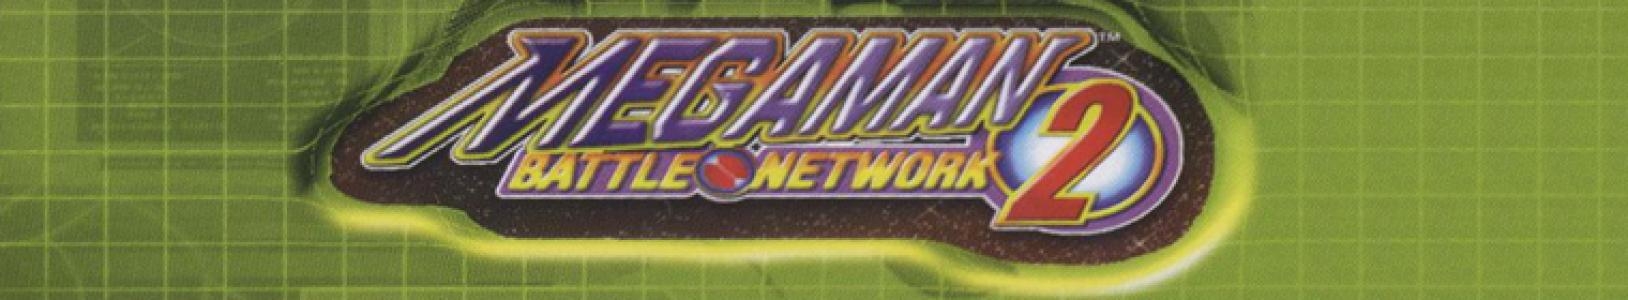 Mega Man Battle Network 2 banner